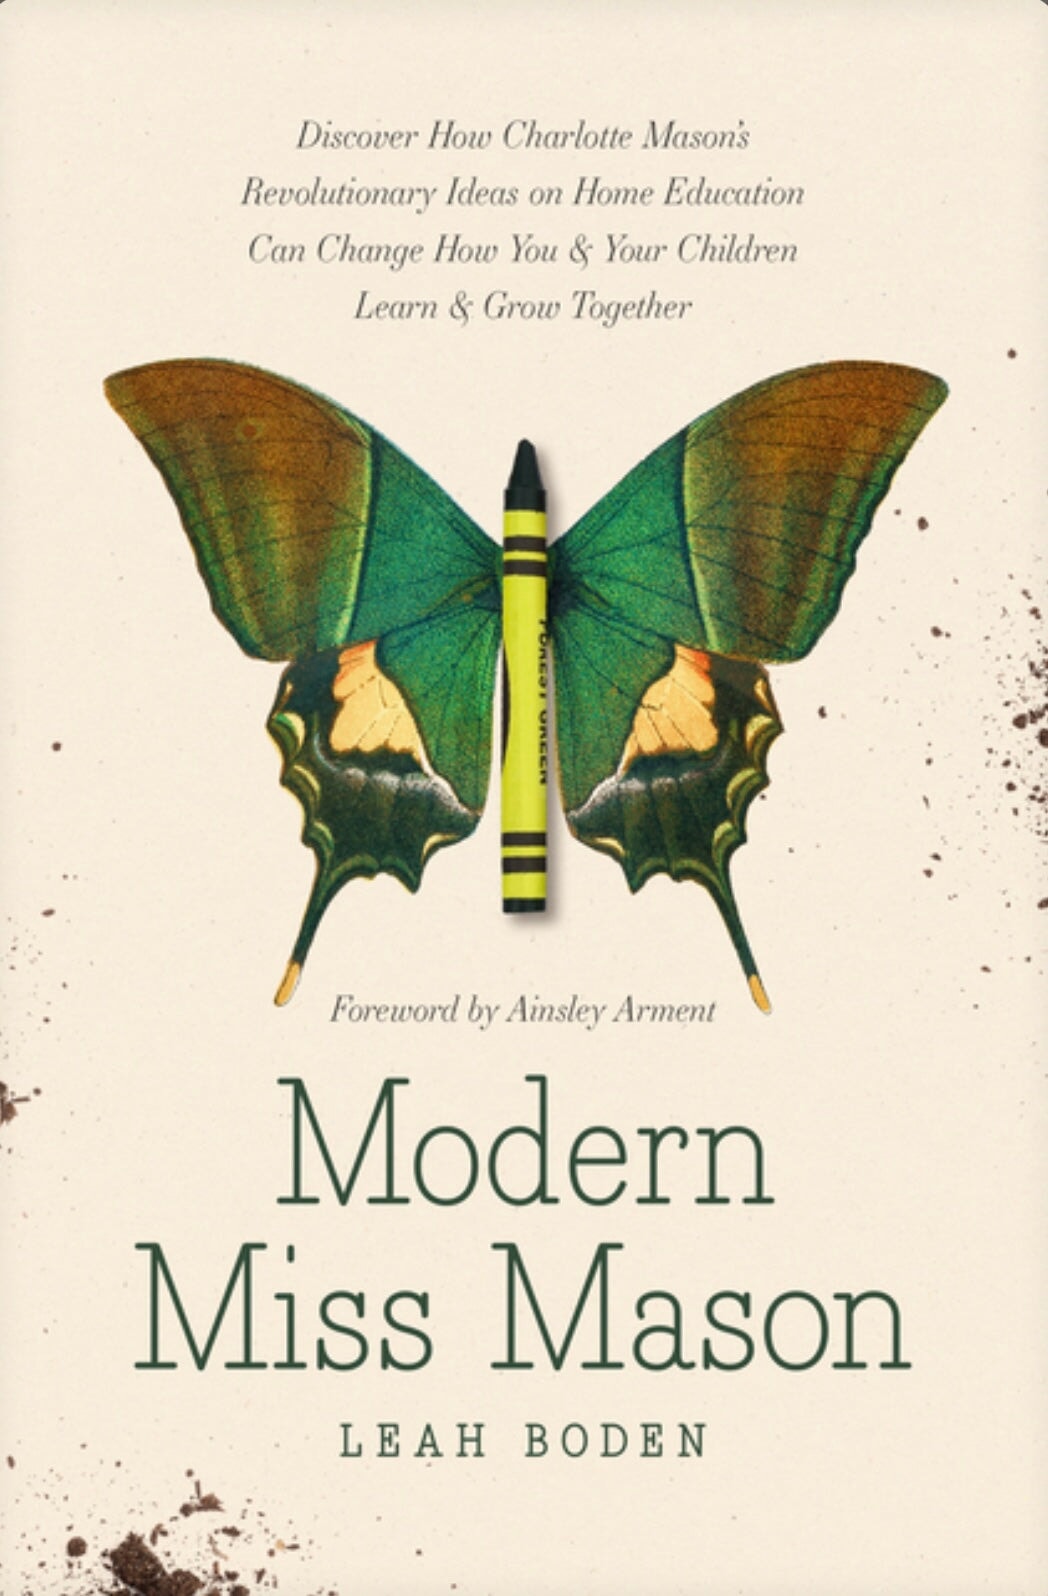 Modern Miss Mason by Leah Biden | Charlotte Mason Homeschooling Books - Alder & Alouette